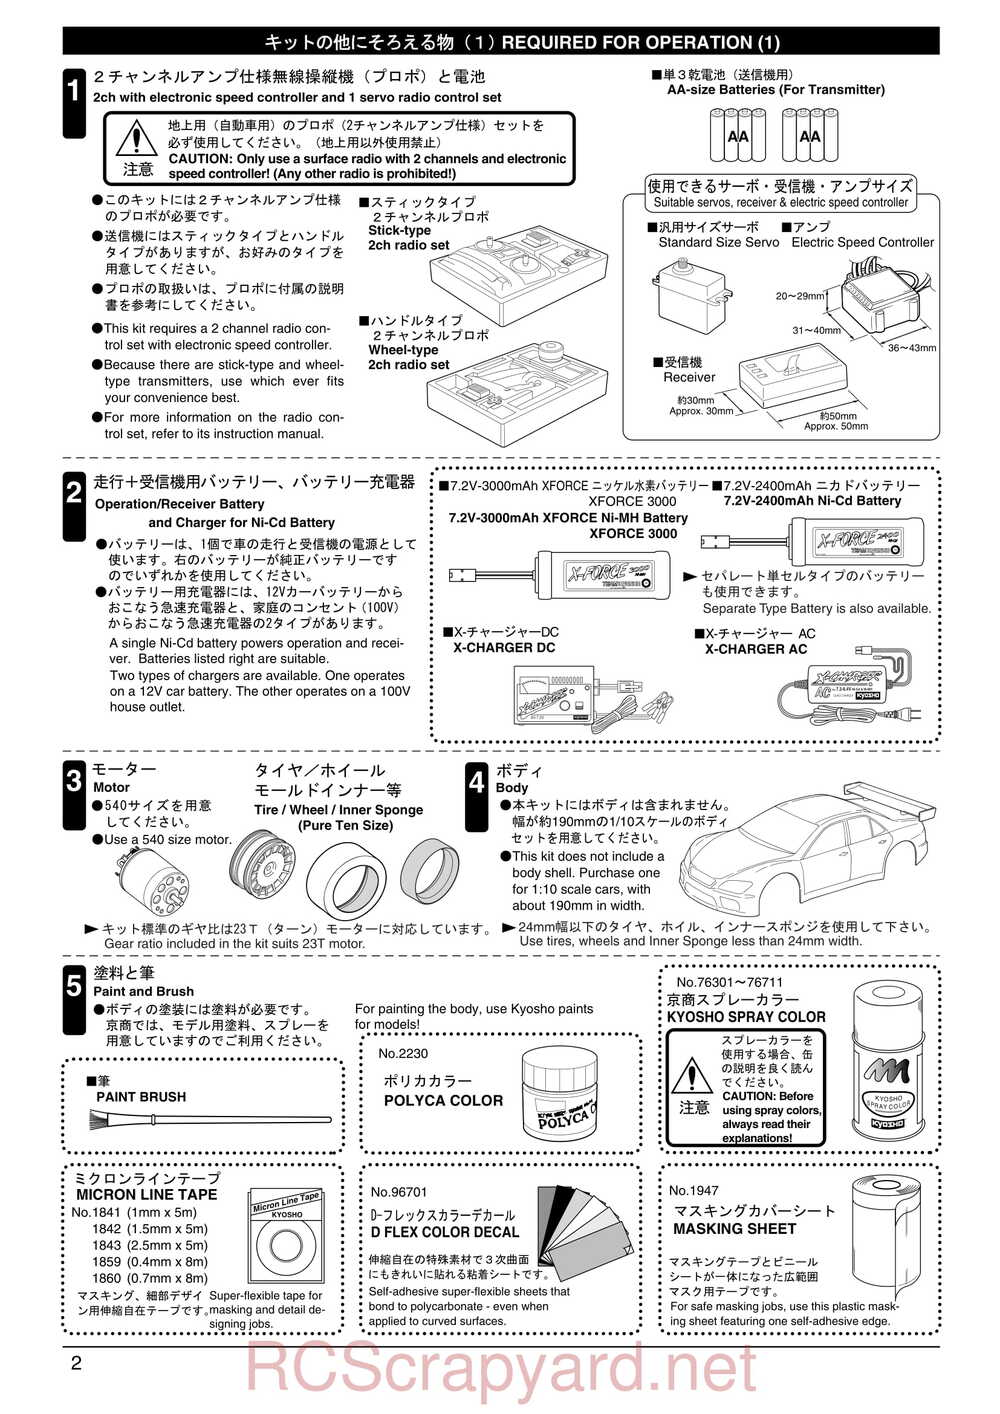 Kyosho - 30101 - KX-One - Manual - Page 02